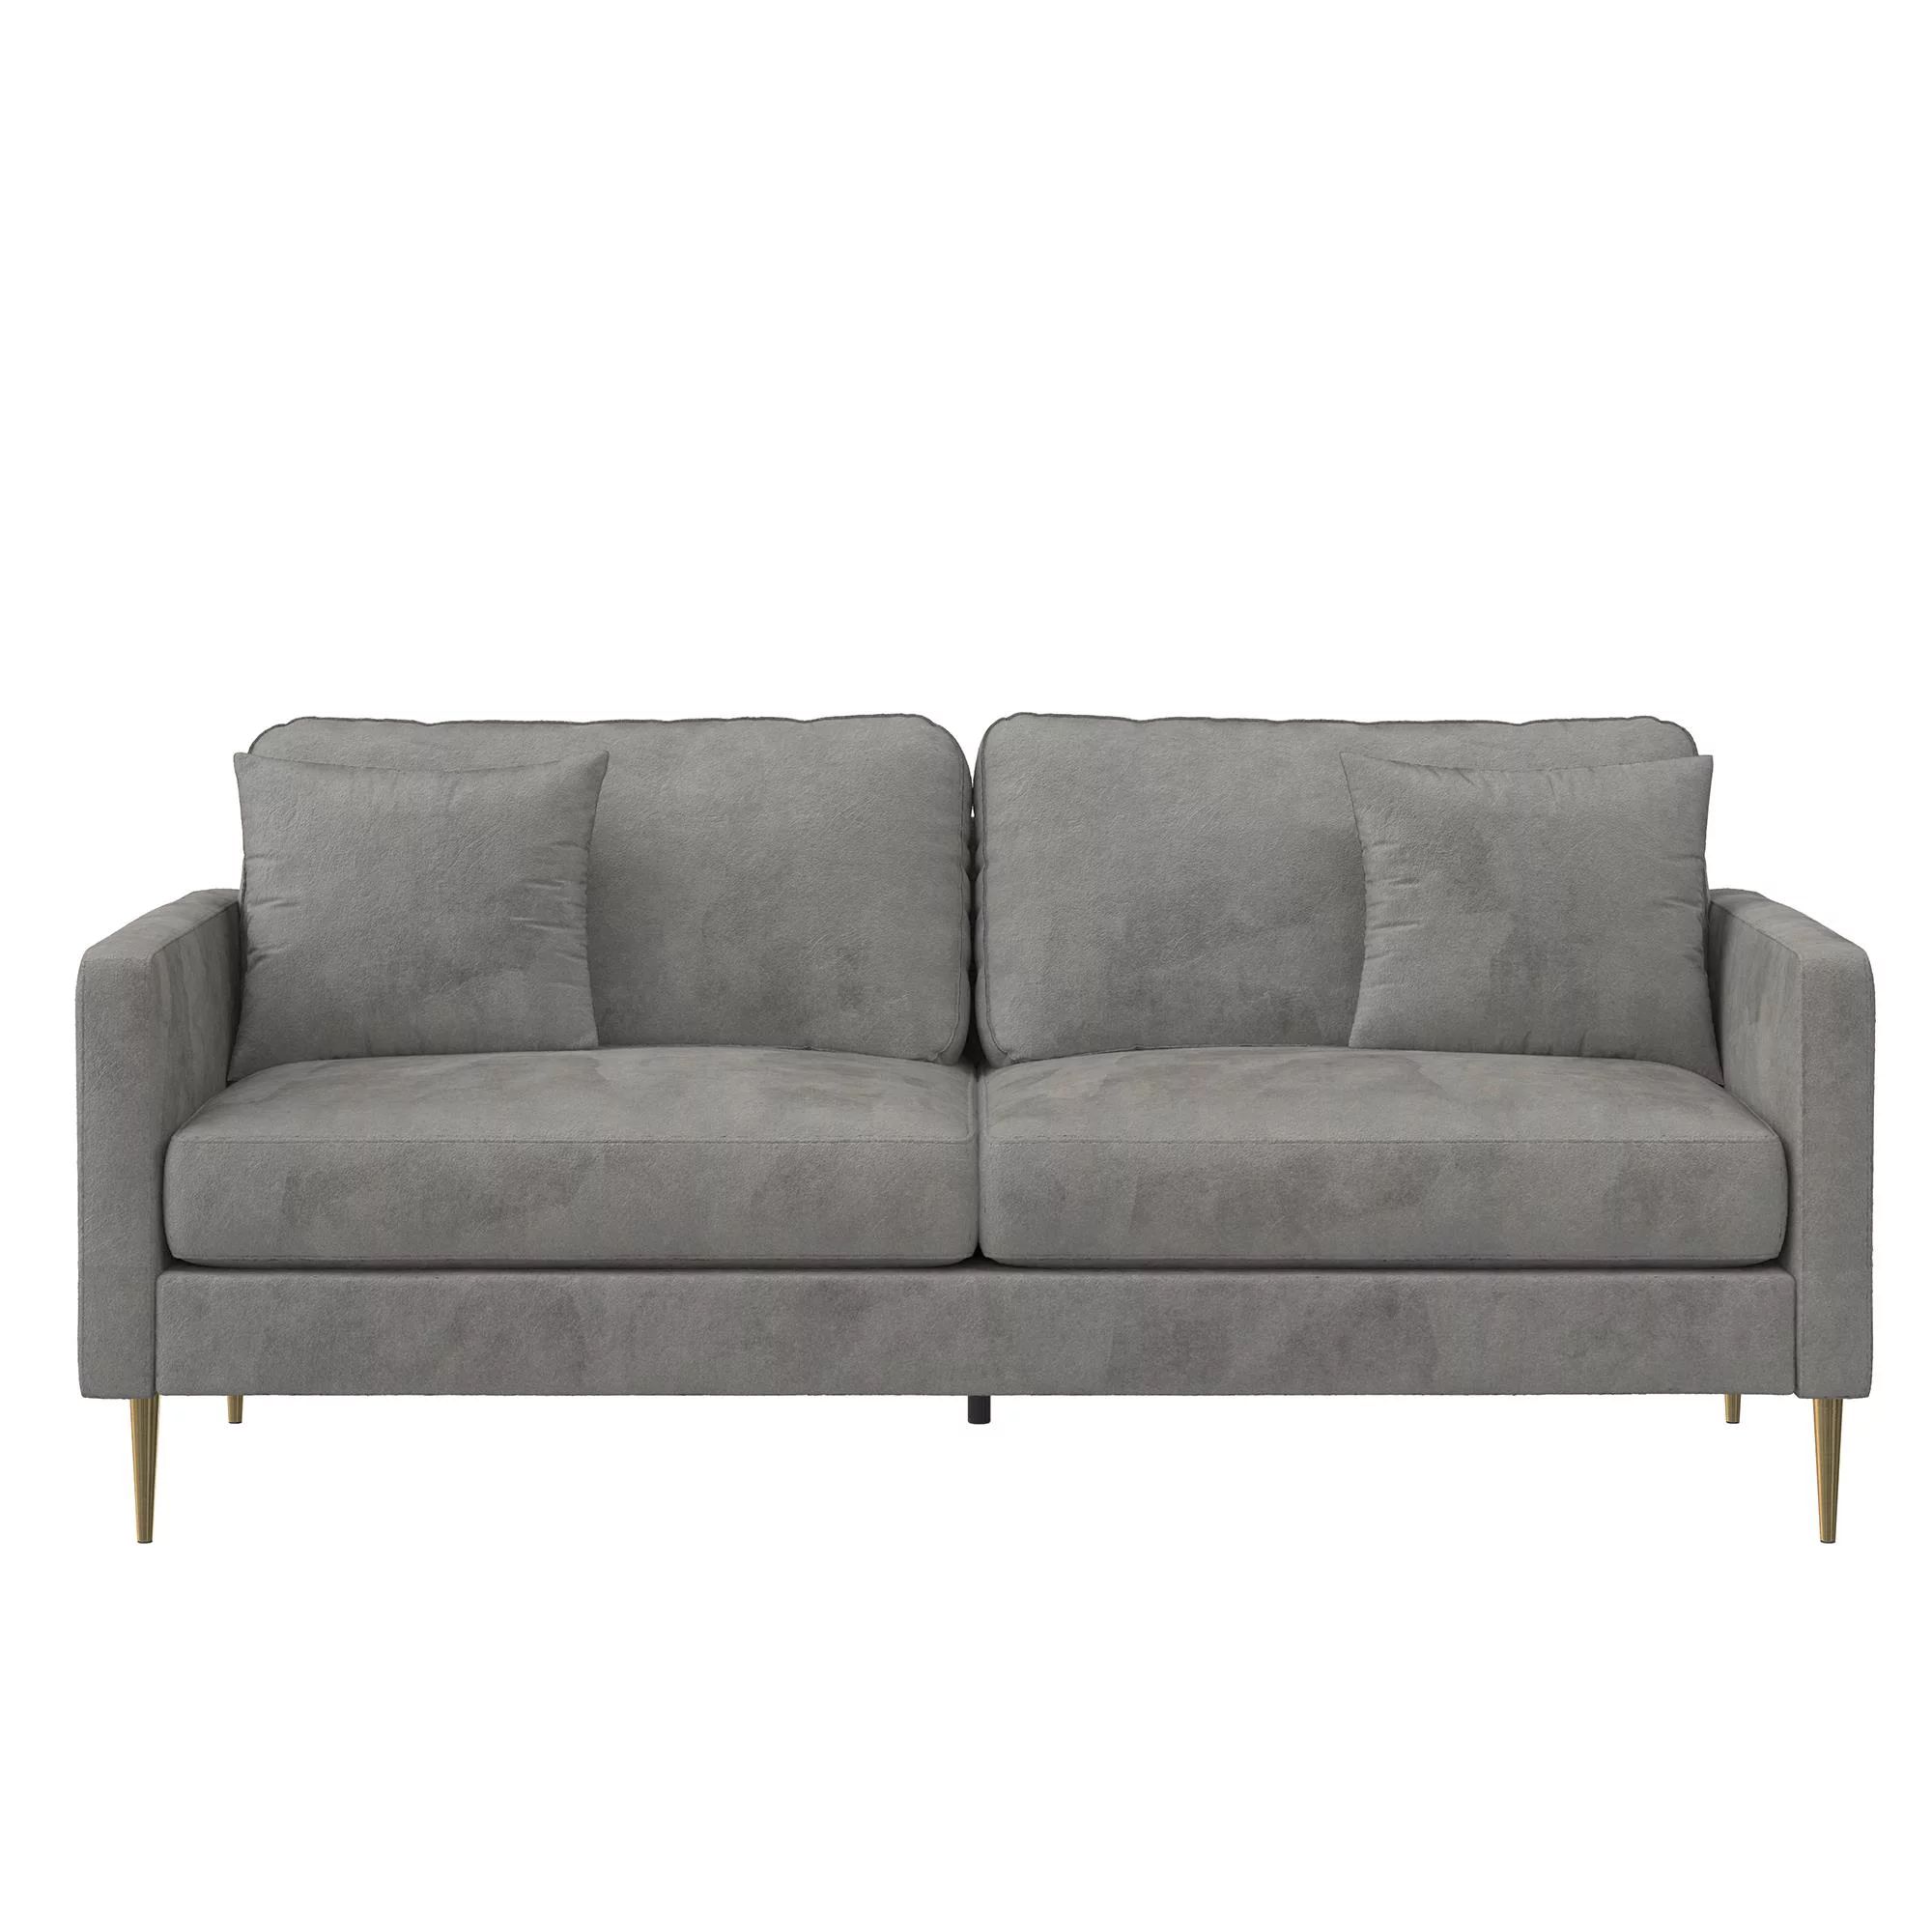 CosmoLiving Highland Sofa with Pillows, Gray Velvet - Walmart.com | Walmart (US)